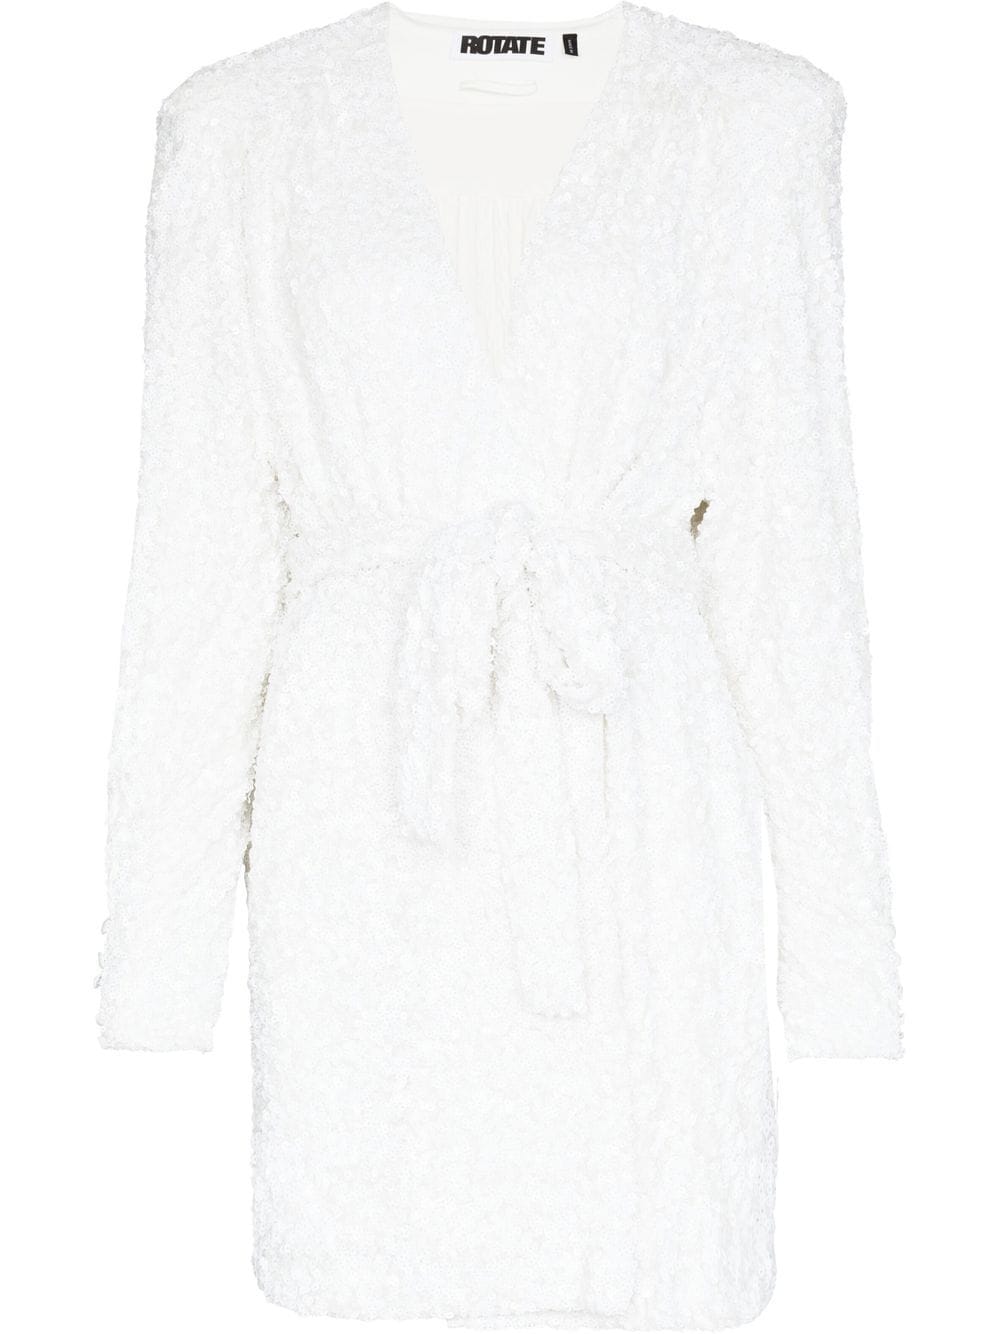 ROTATE Samantha sequin wrap dress - White